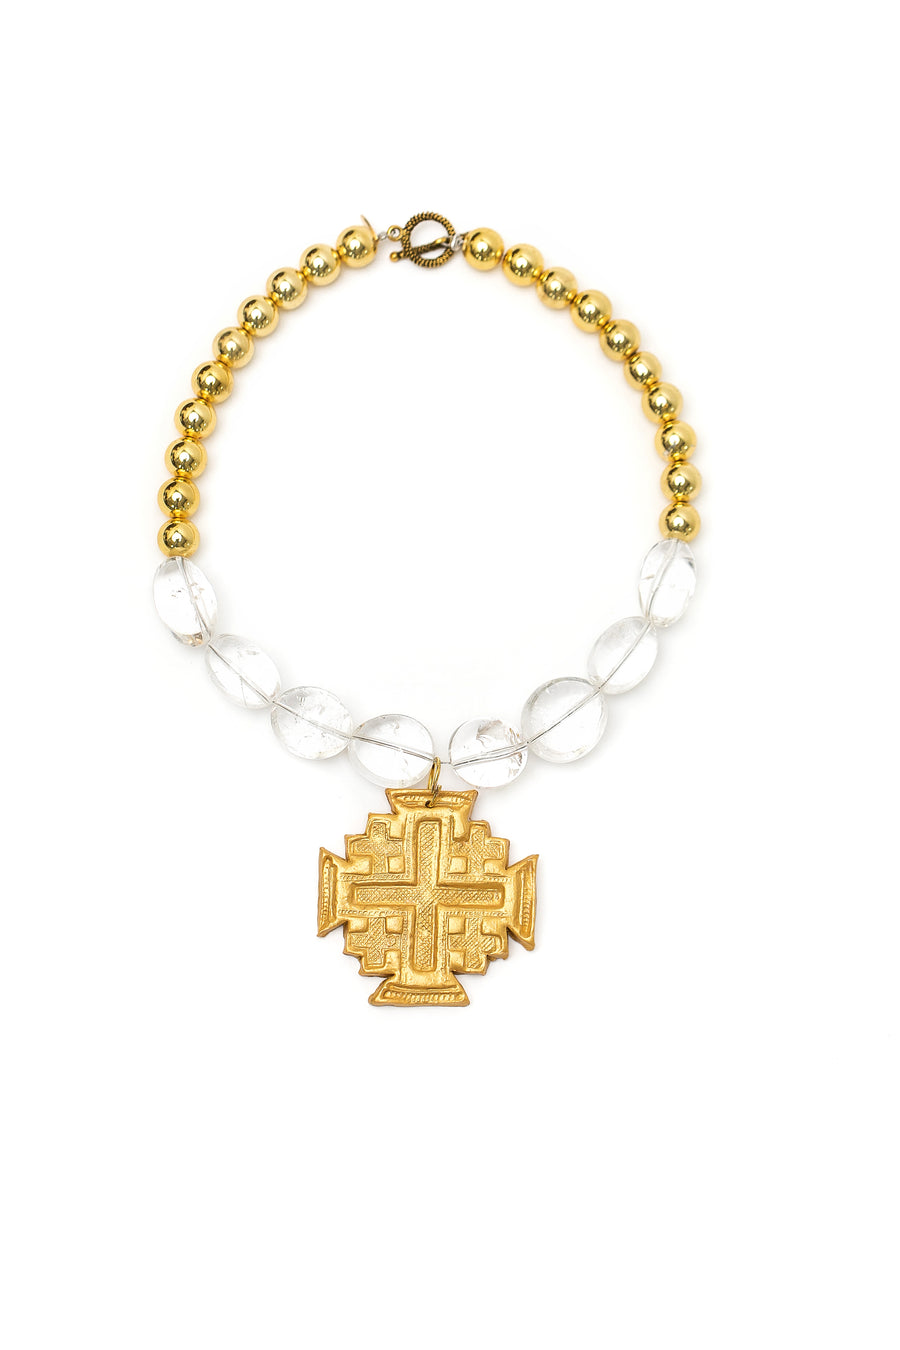 Gold & Clear Quartz Nuggets with Jerusalem Cross